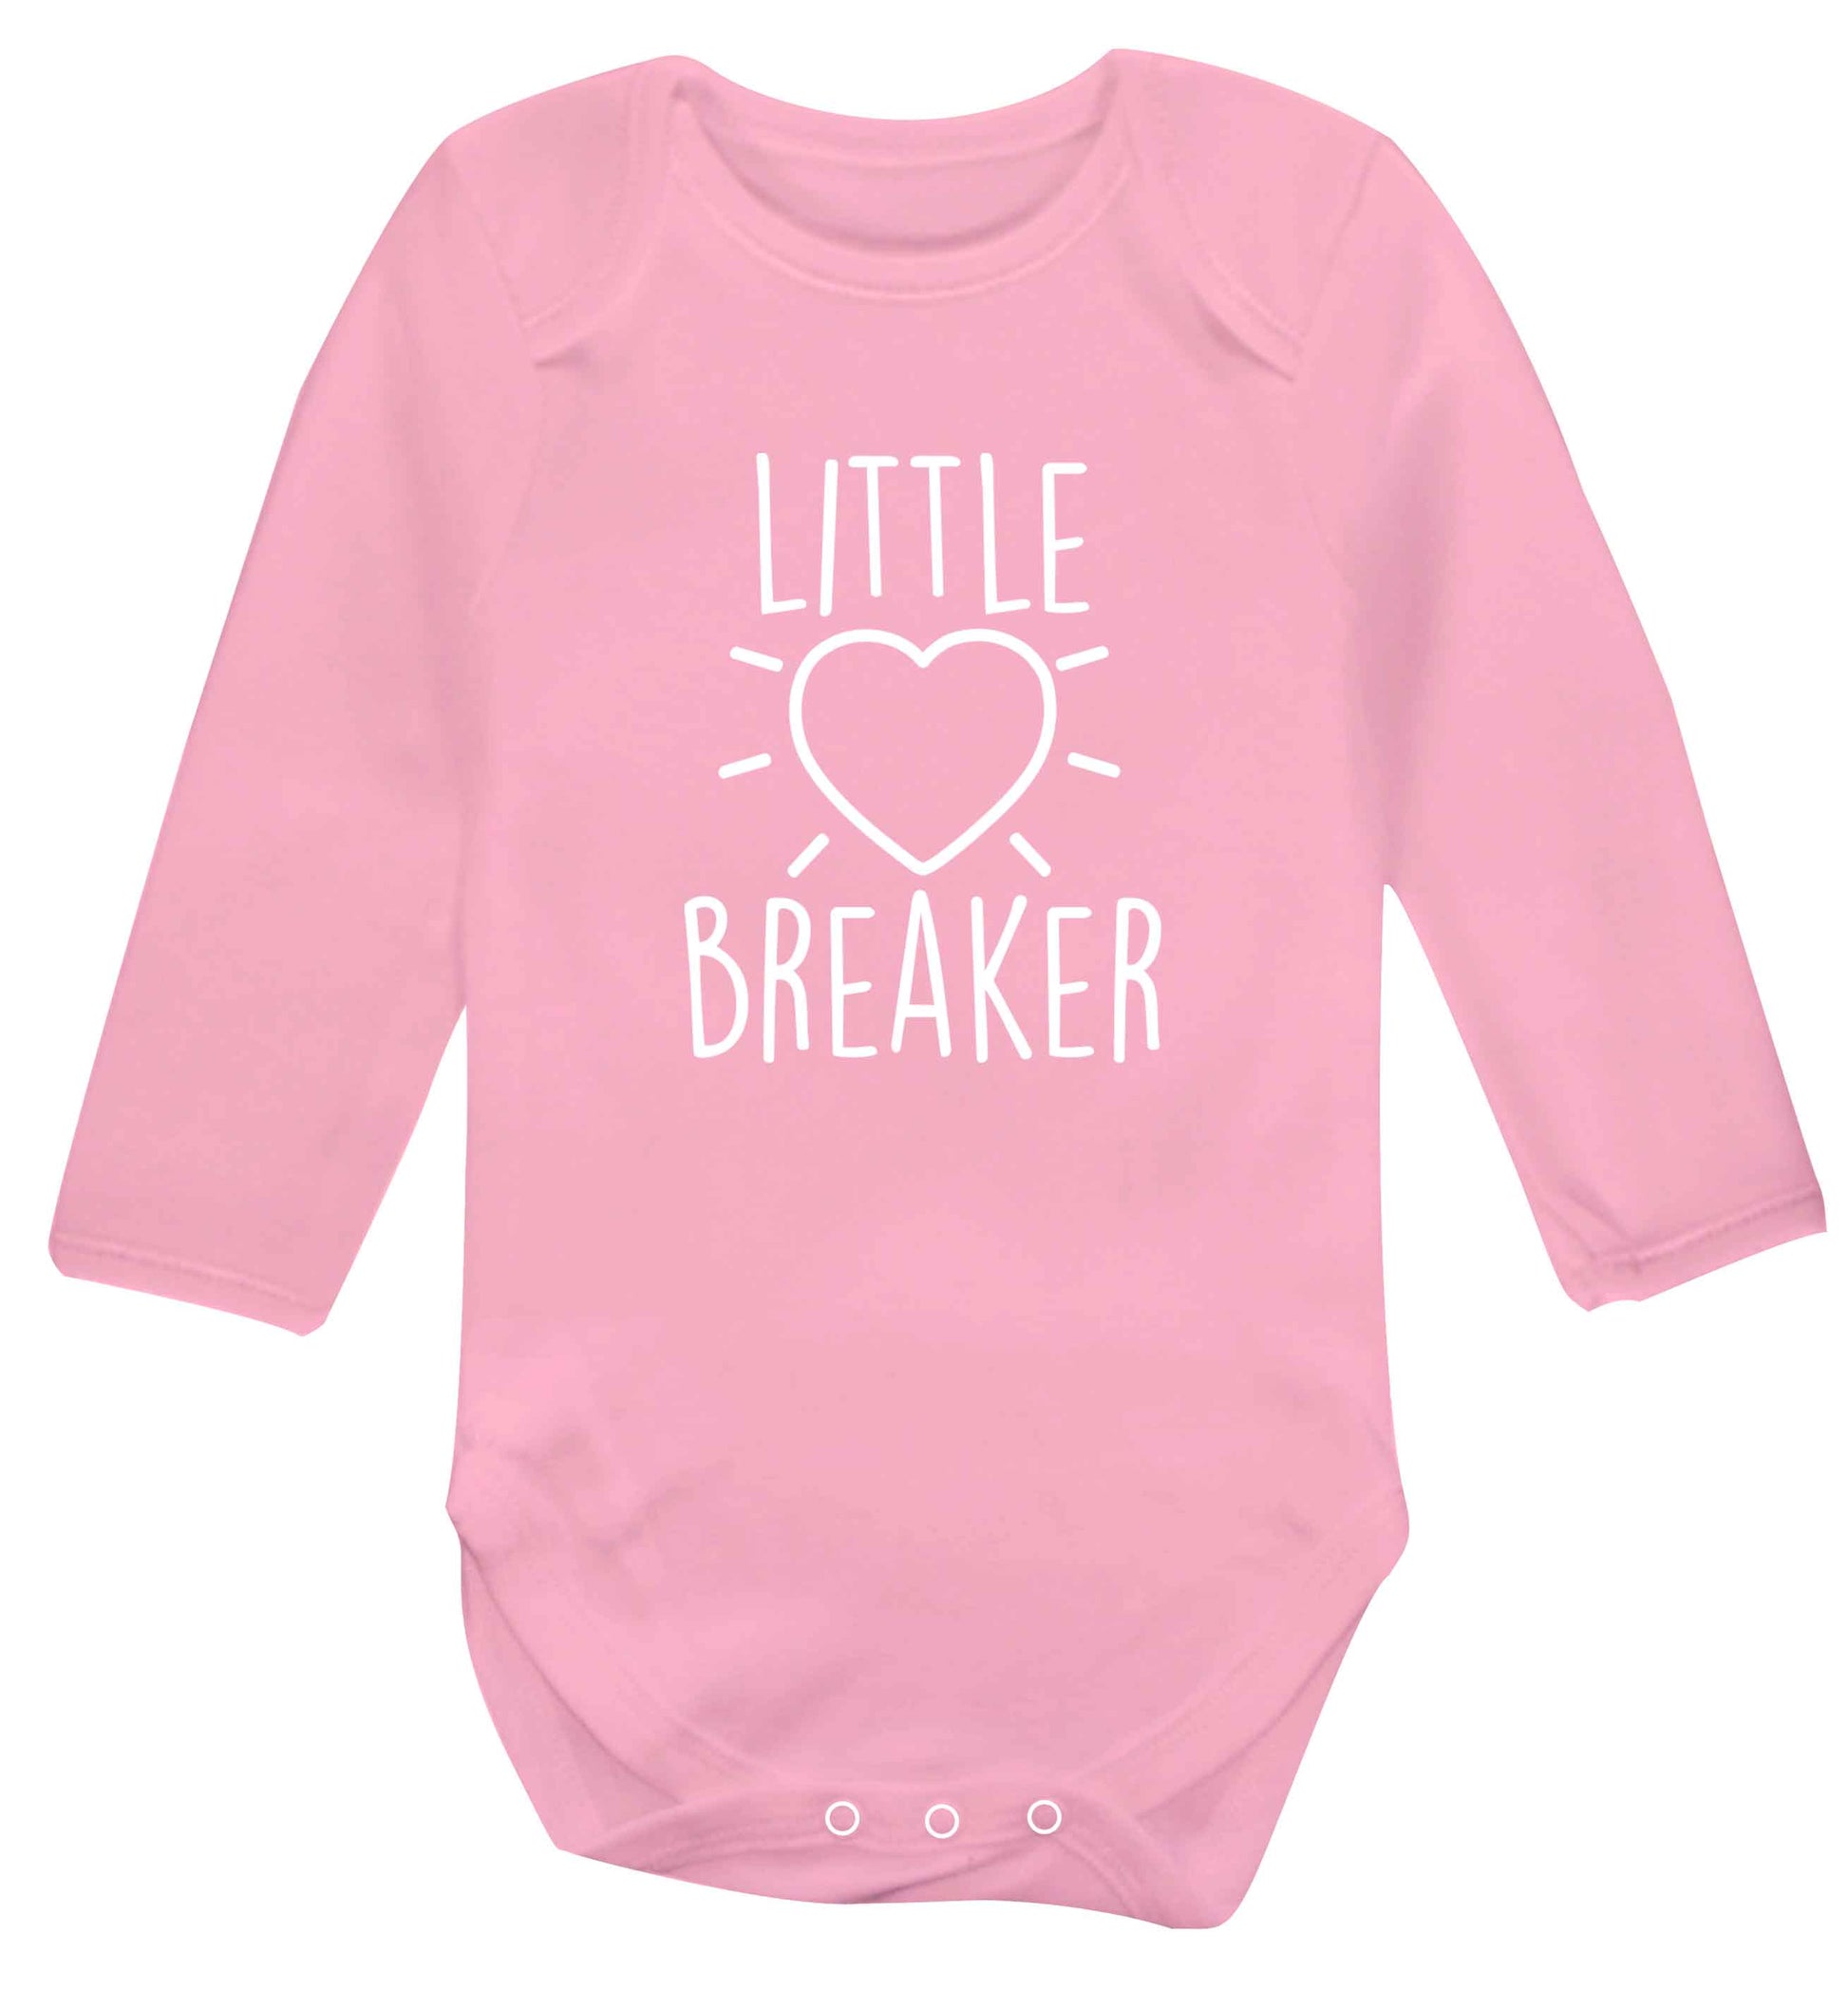 Little heartbreaker baby vest long sleeved pale pink 6-12 months